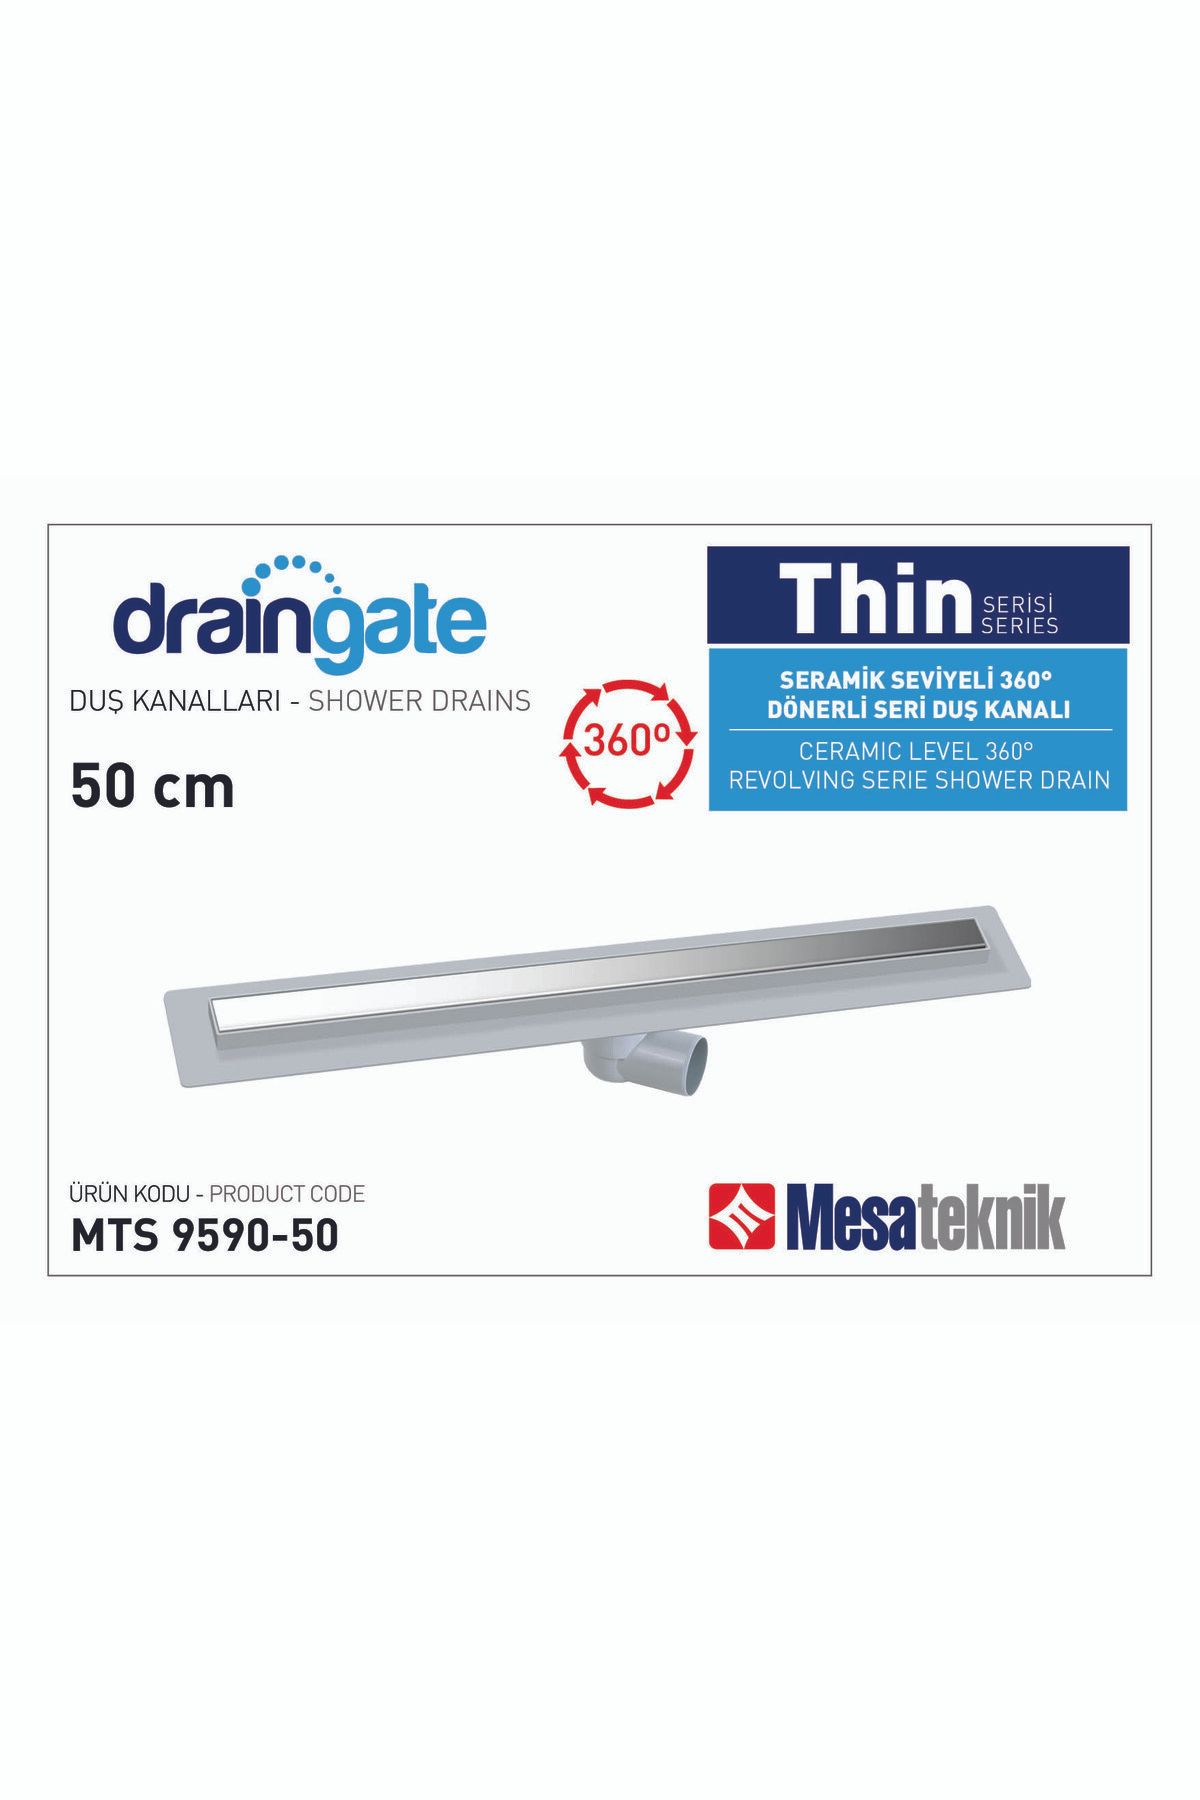 Mesateknik Draingate® Thin Serisi Seramik Seviyeli 360° Dönerli Seri Duş Süzgeci 50cm